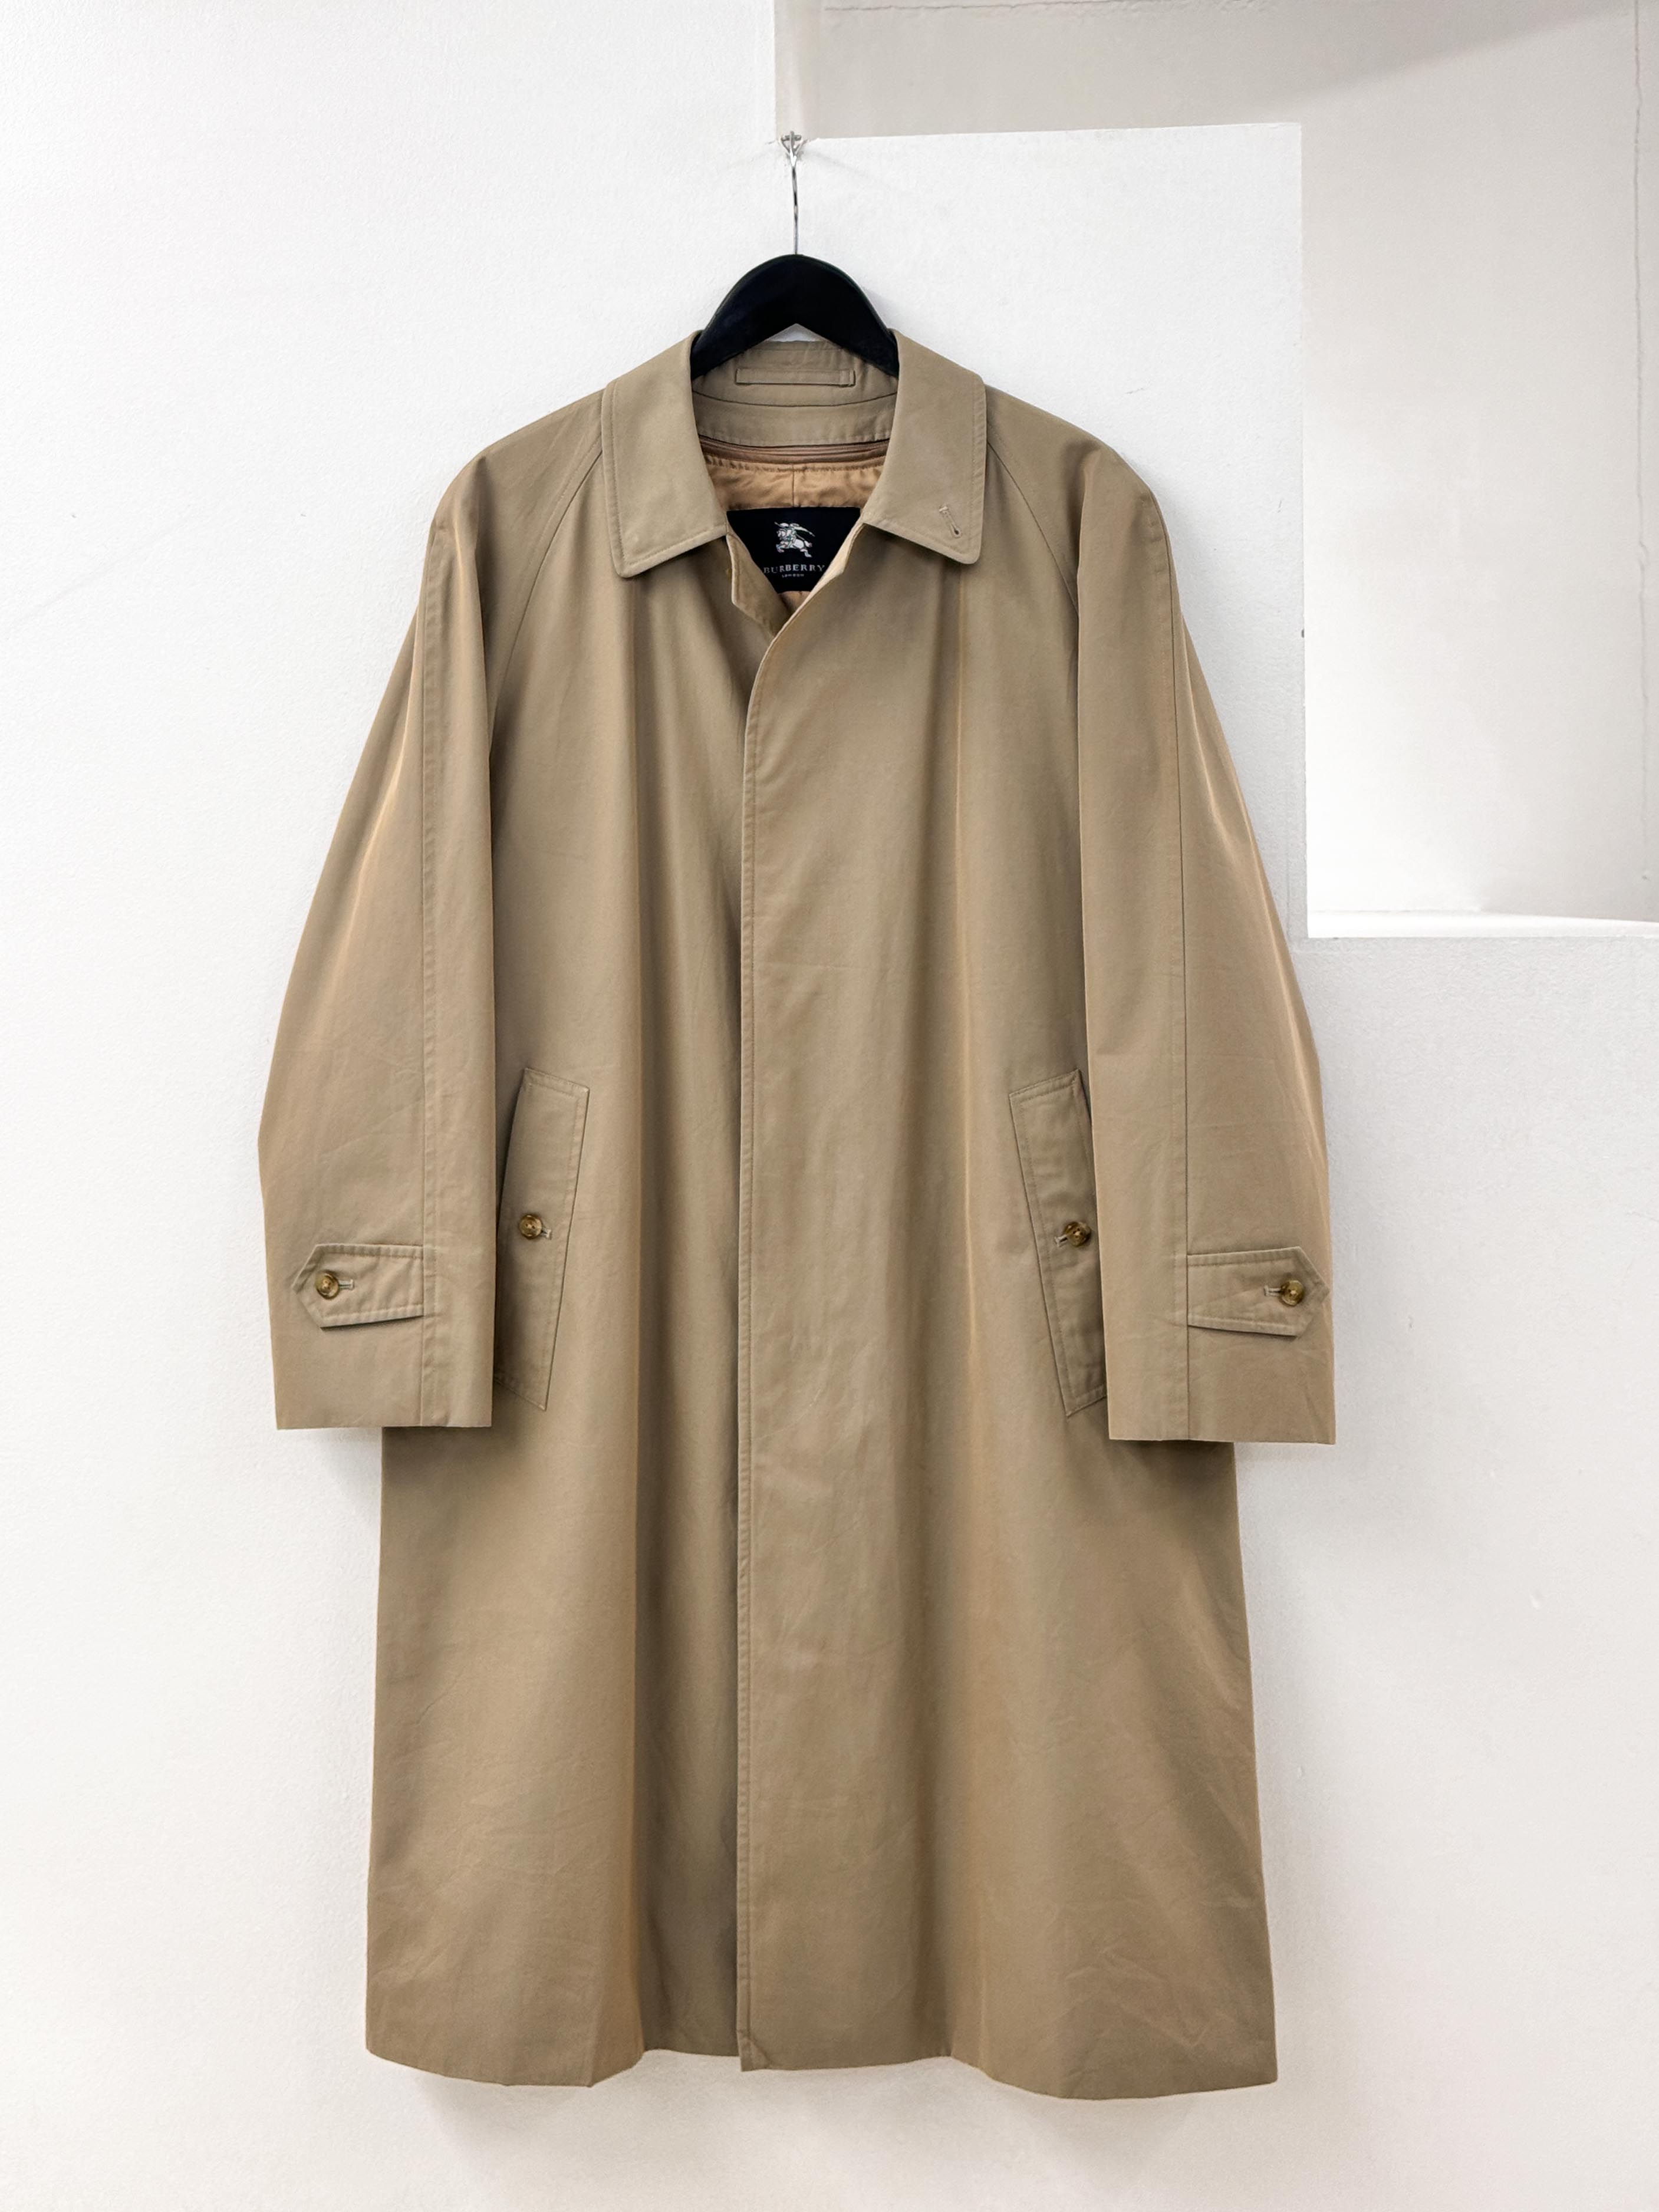 Burberry single trench coat